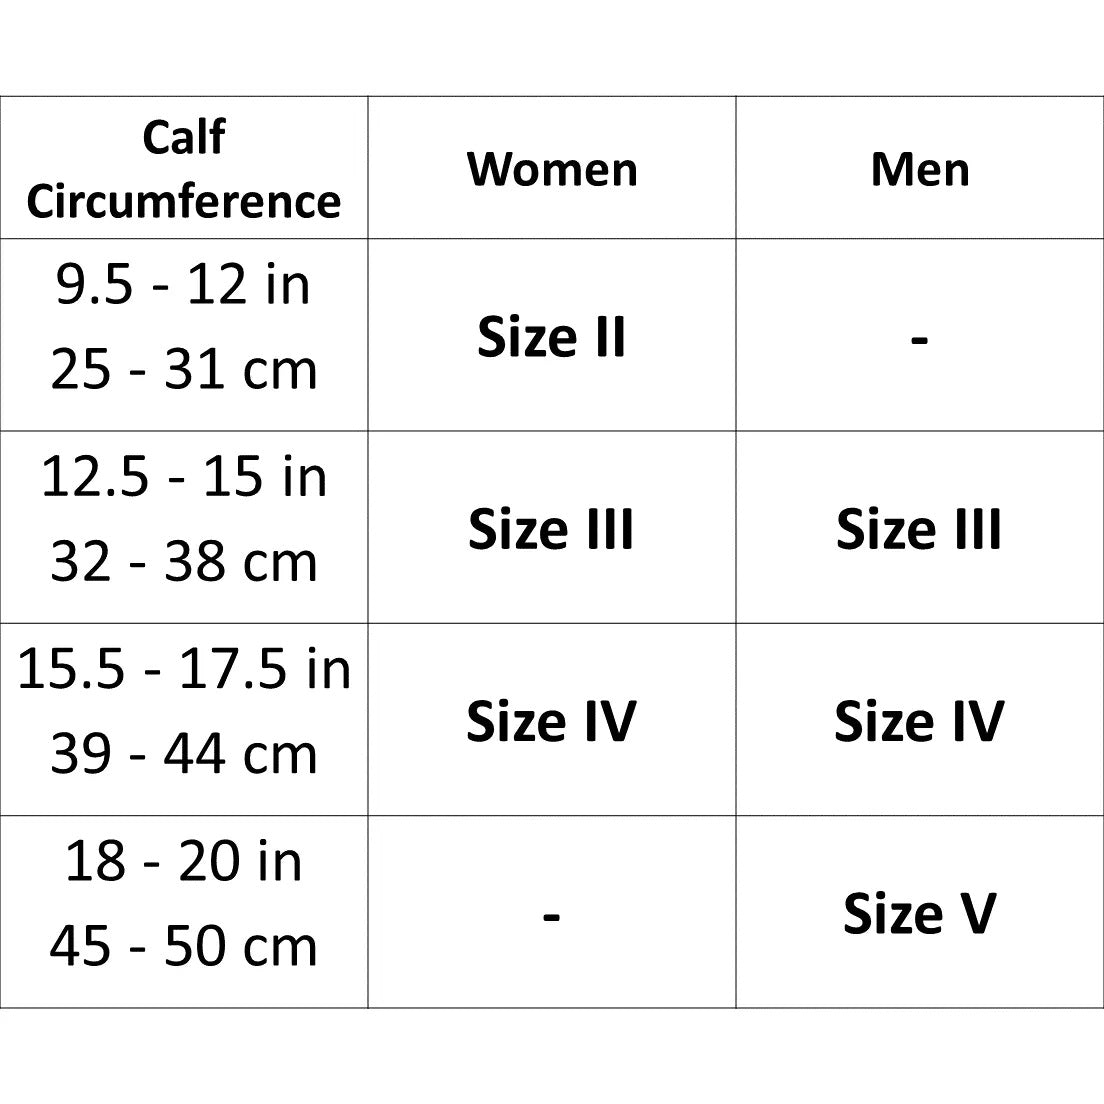 Men ULTRALIGHT CEP knee high 20-30 mmHg Compression Socks